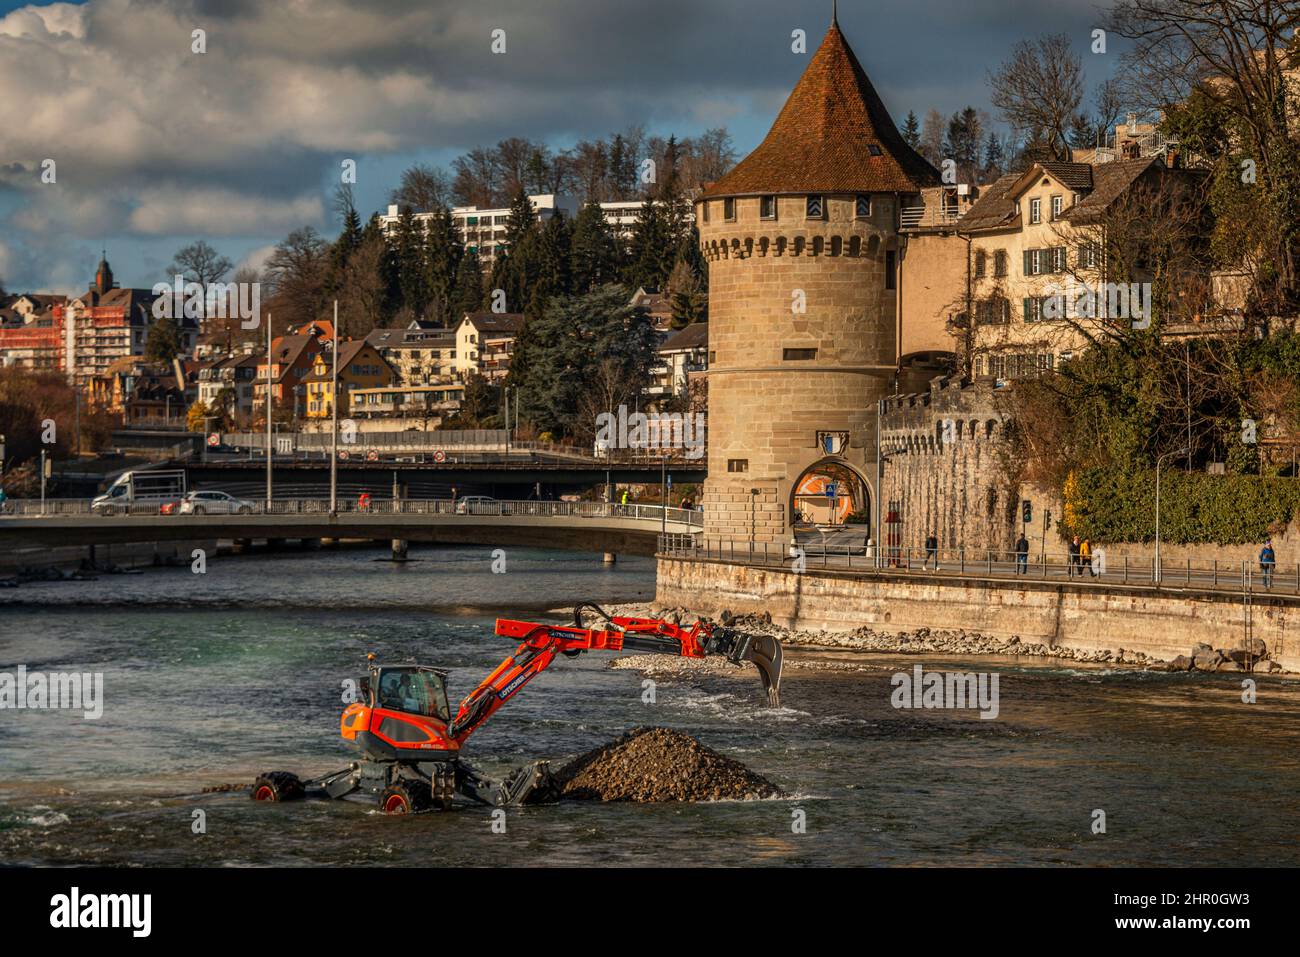 Excavator shovel dredging river, Lucerne, Switzerland Stock Photo